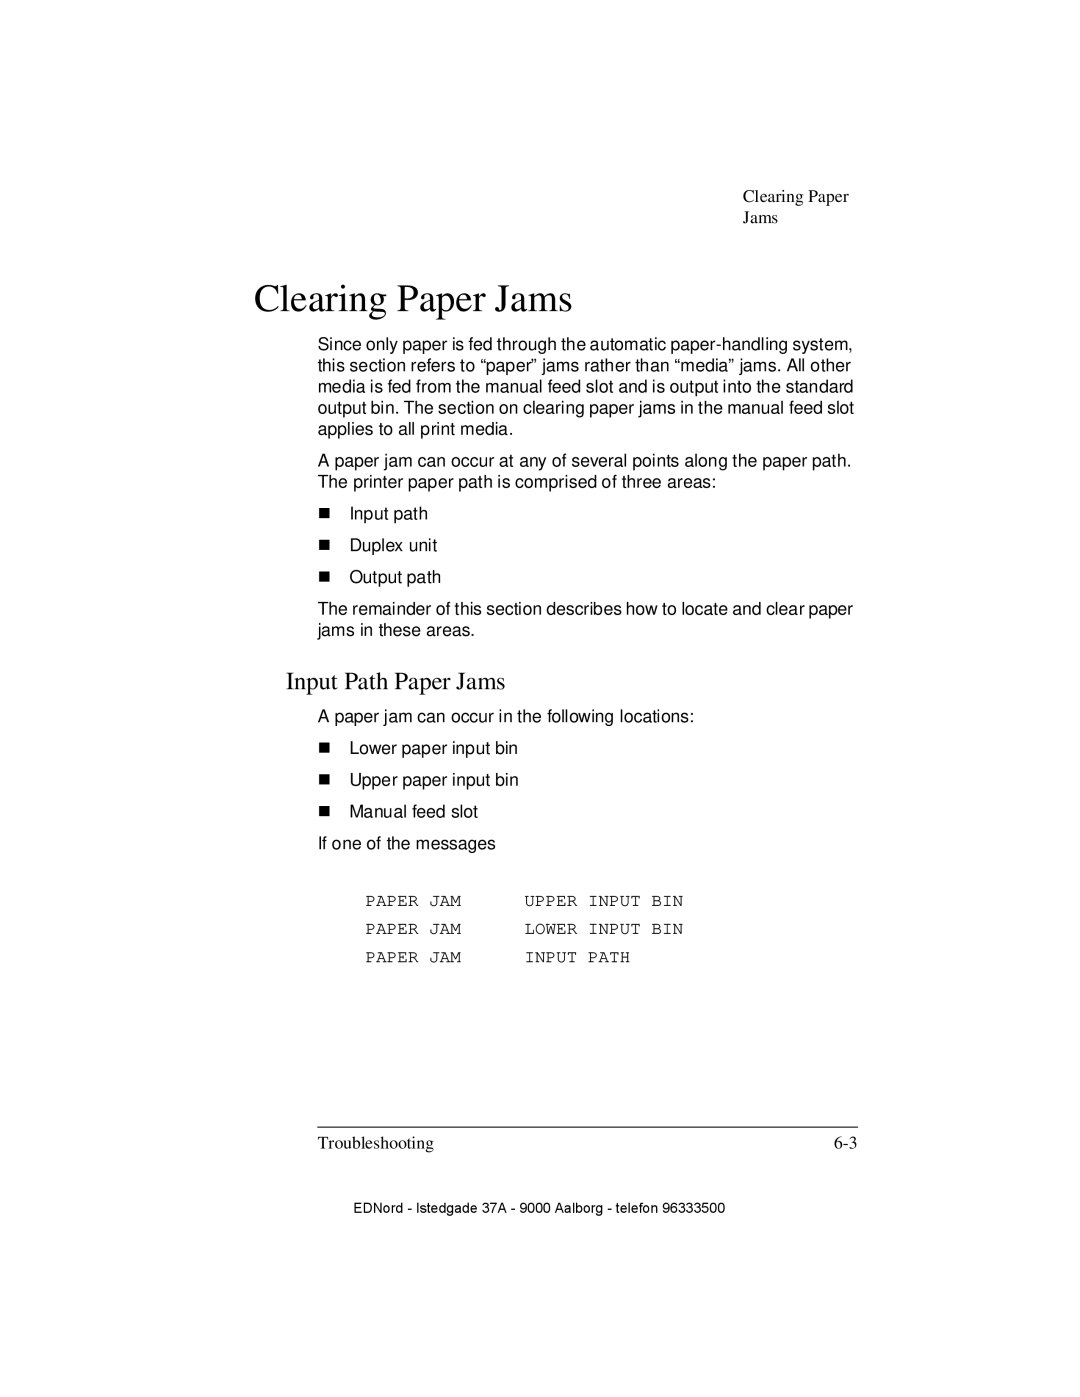 IBM QMS 4525 manual Clearing Paper Jams, Input Path Paper Jams 